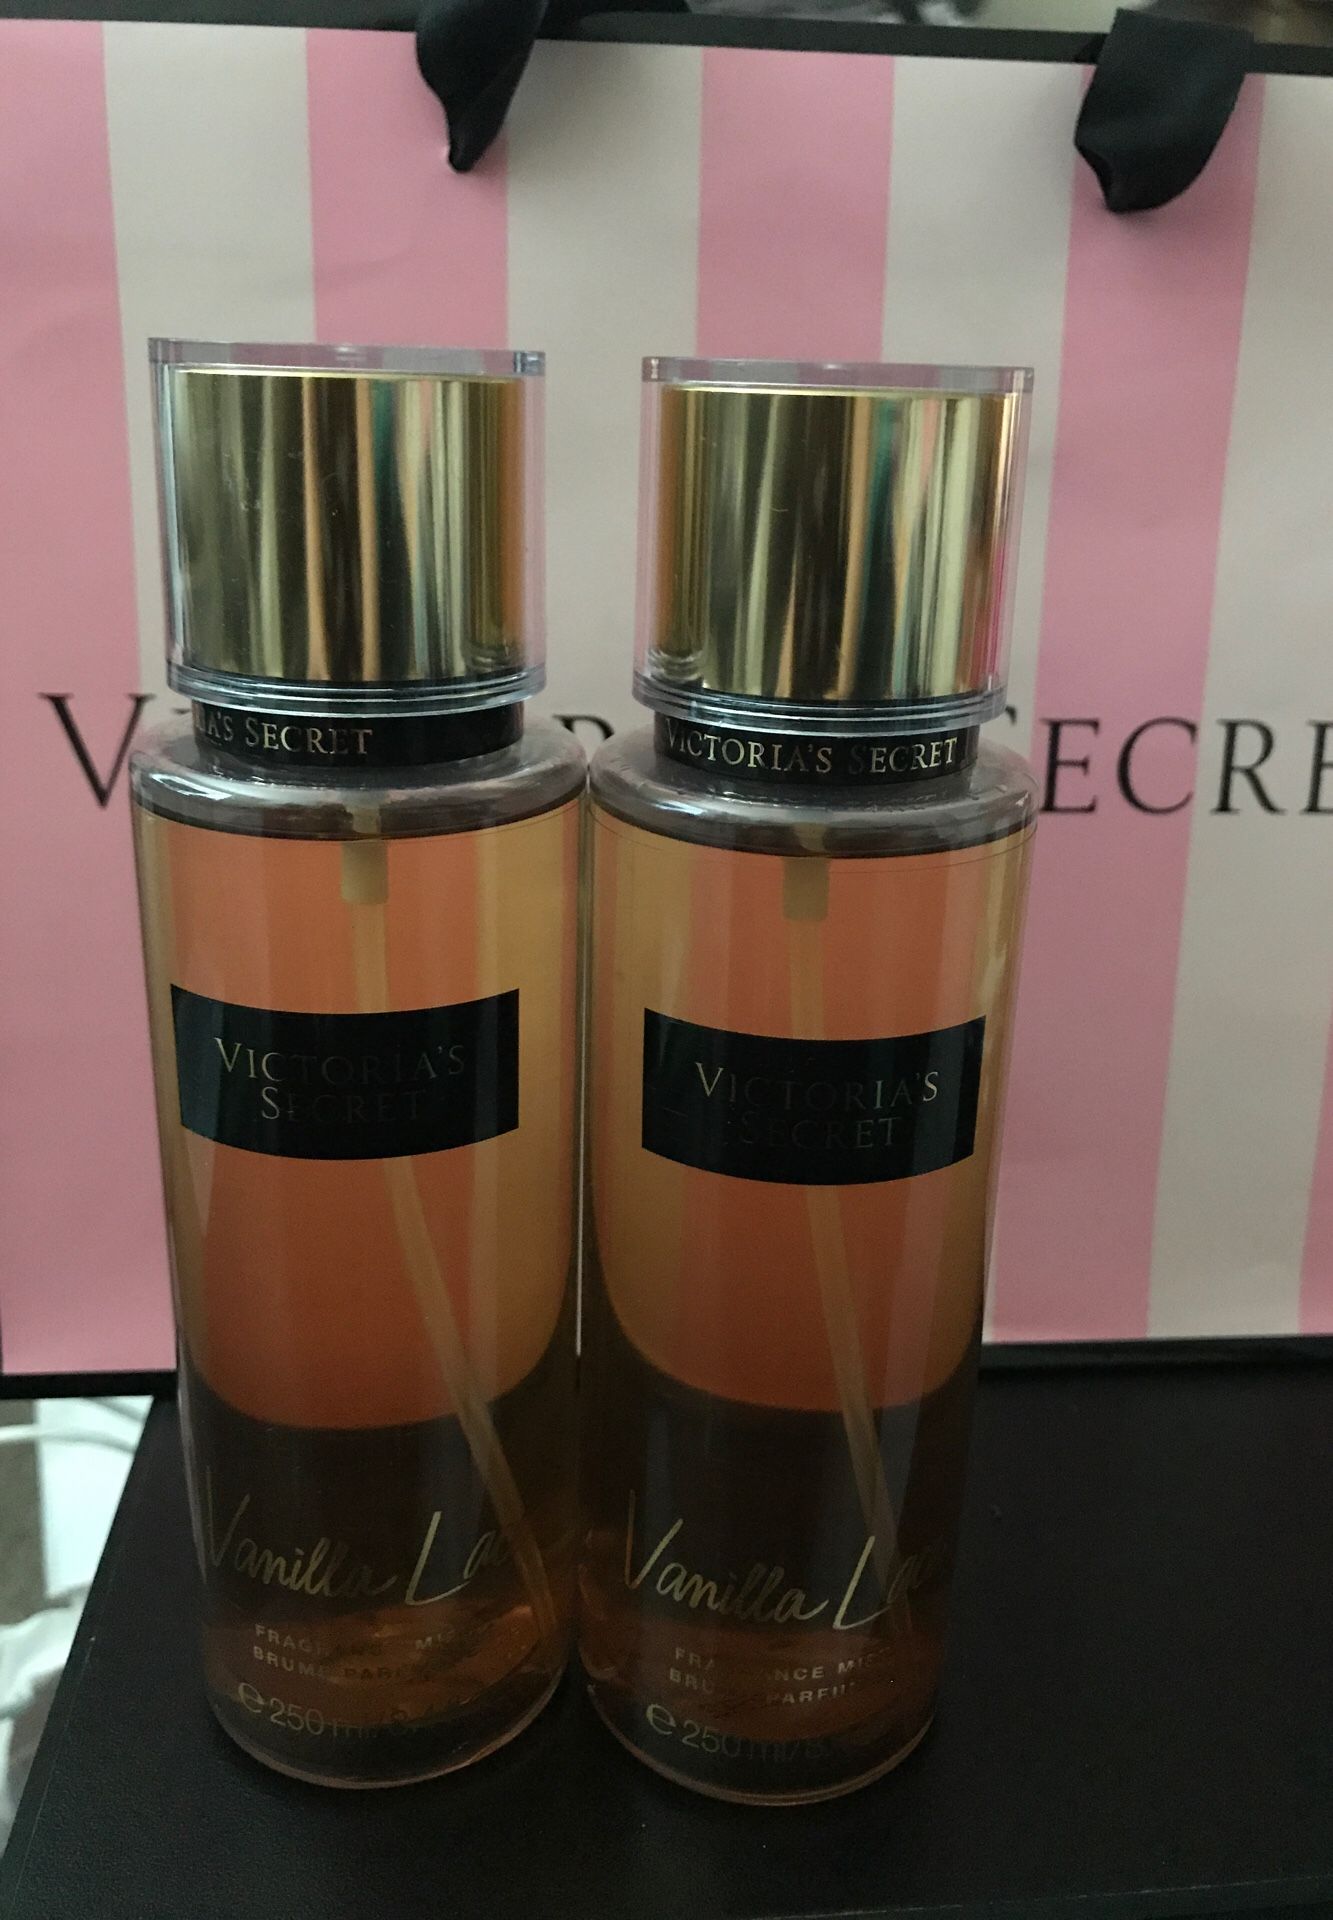 Victoria’s Secret Vanilla Lace Duo Fragrance Mist promotion for two pieces